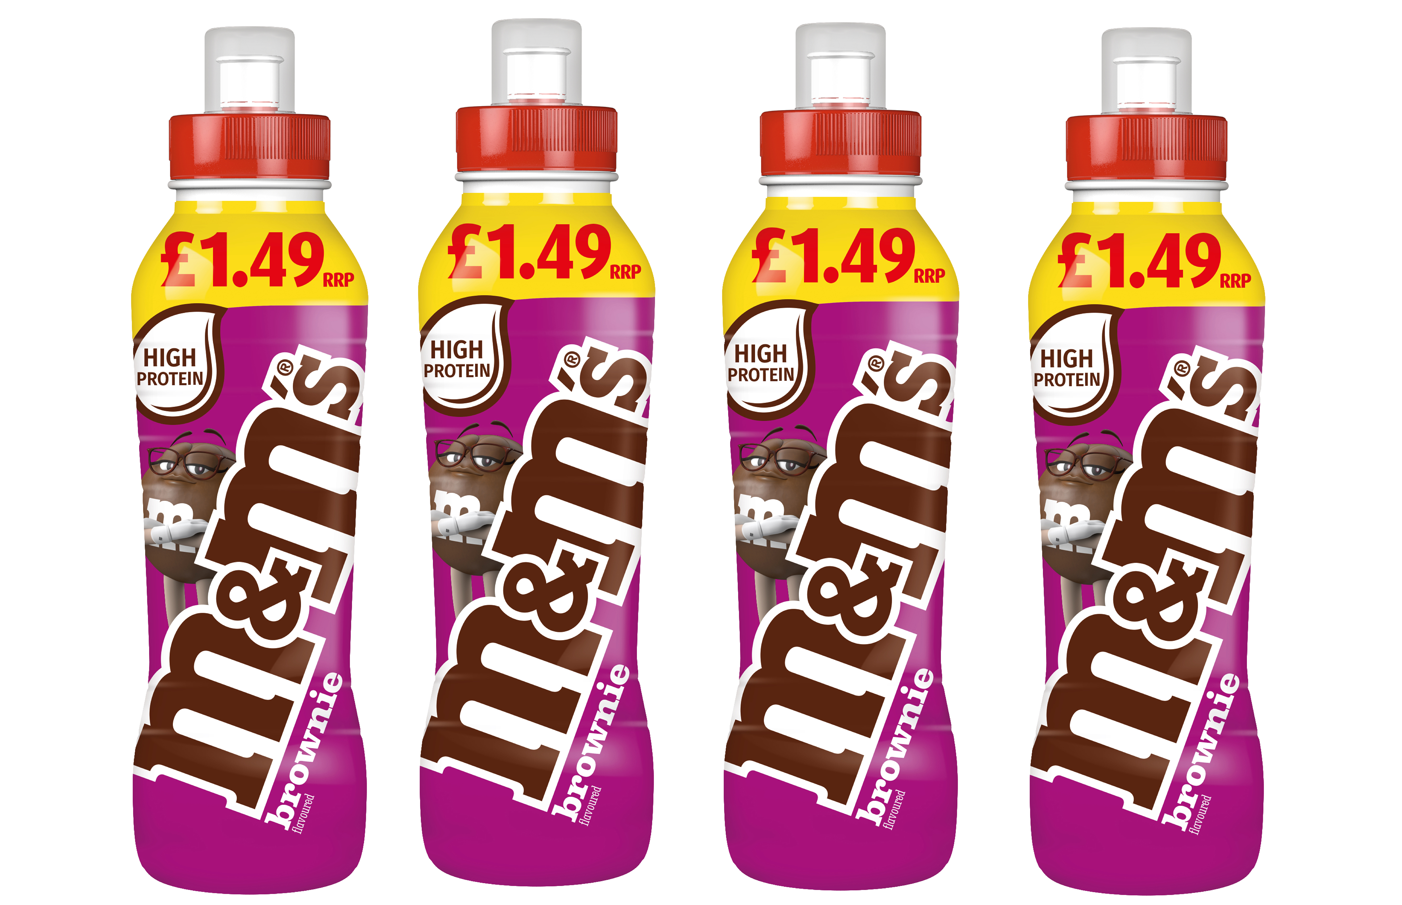 M&M's Chocolate Brownie Milkshake Drink PM £1.59 350ml - We Get Any Stock